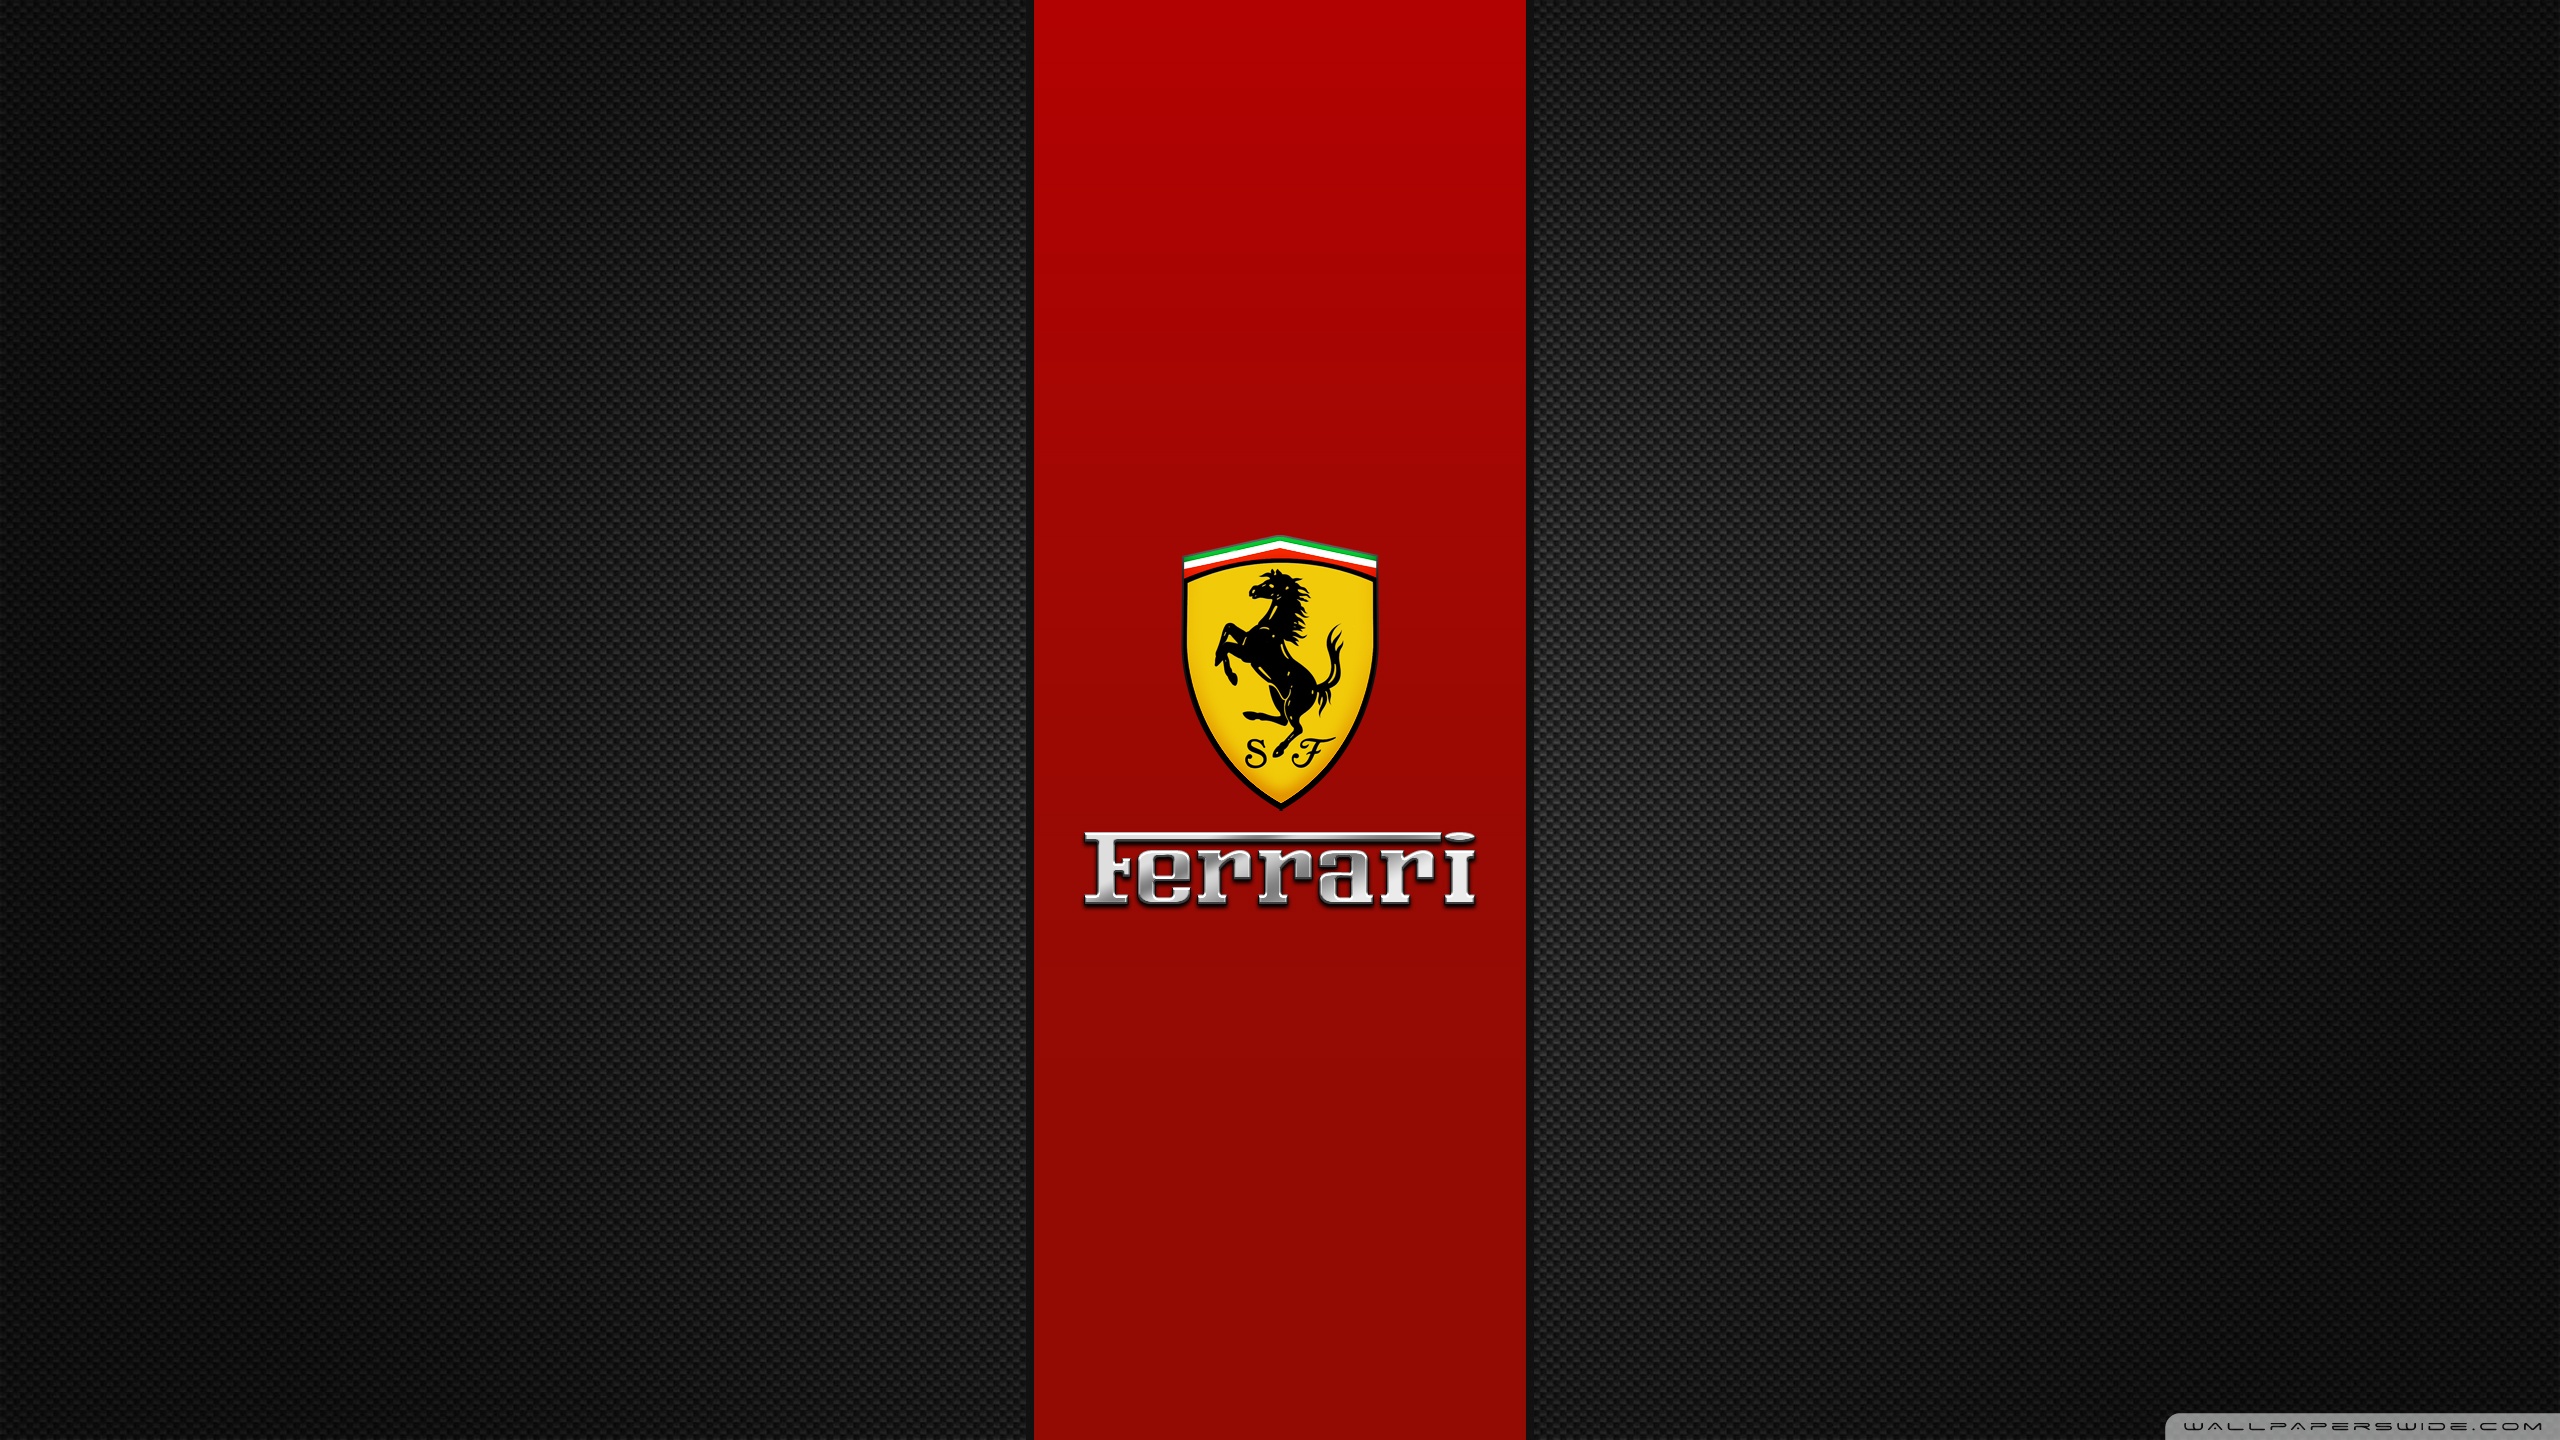 Ferrari Ultra Hd Desktop Background Wallpaper For Multi Display Dual Monitor